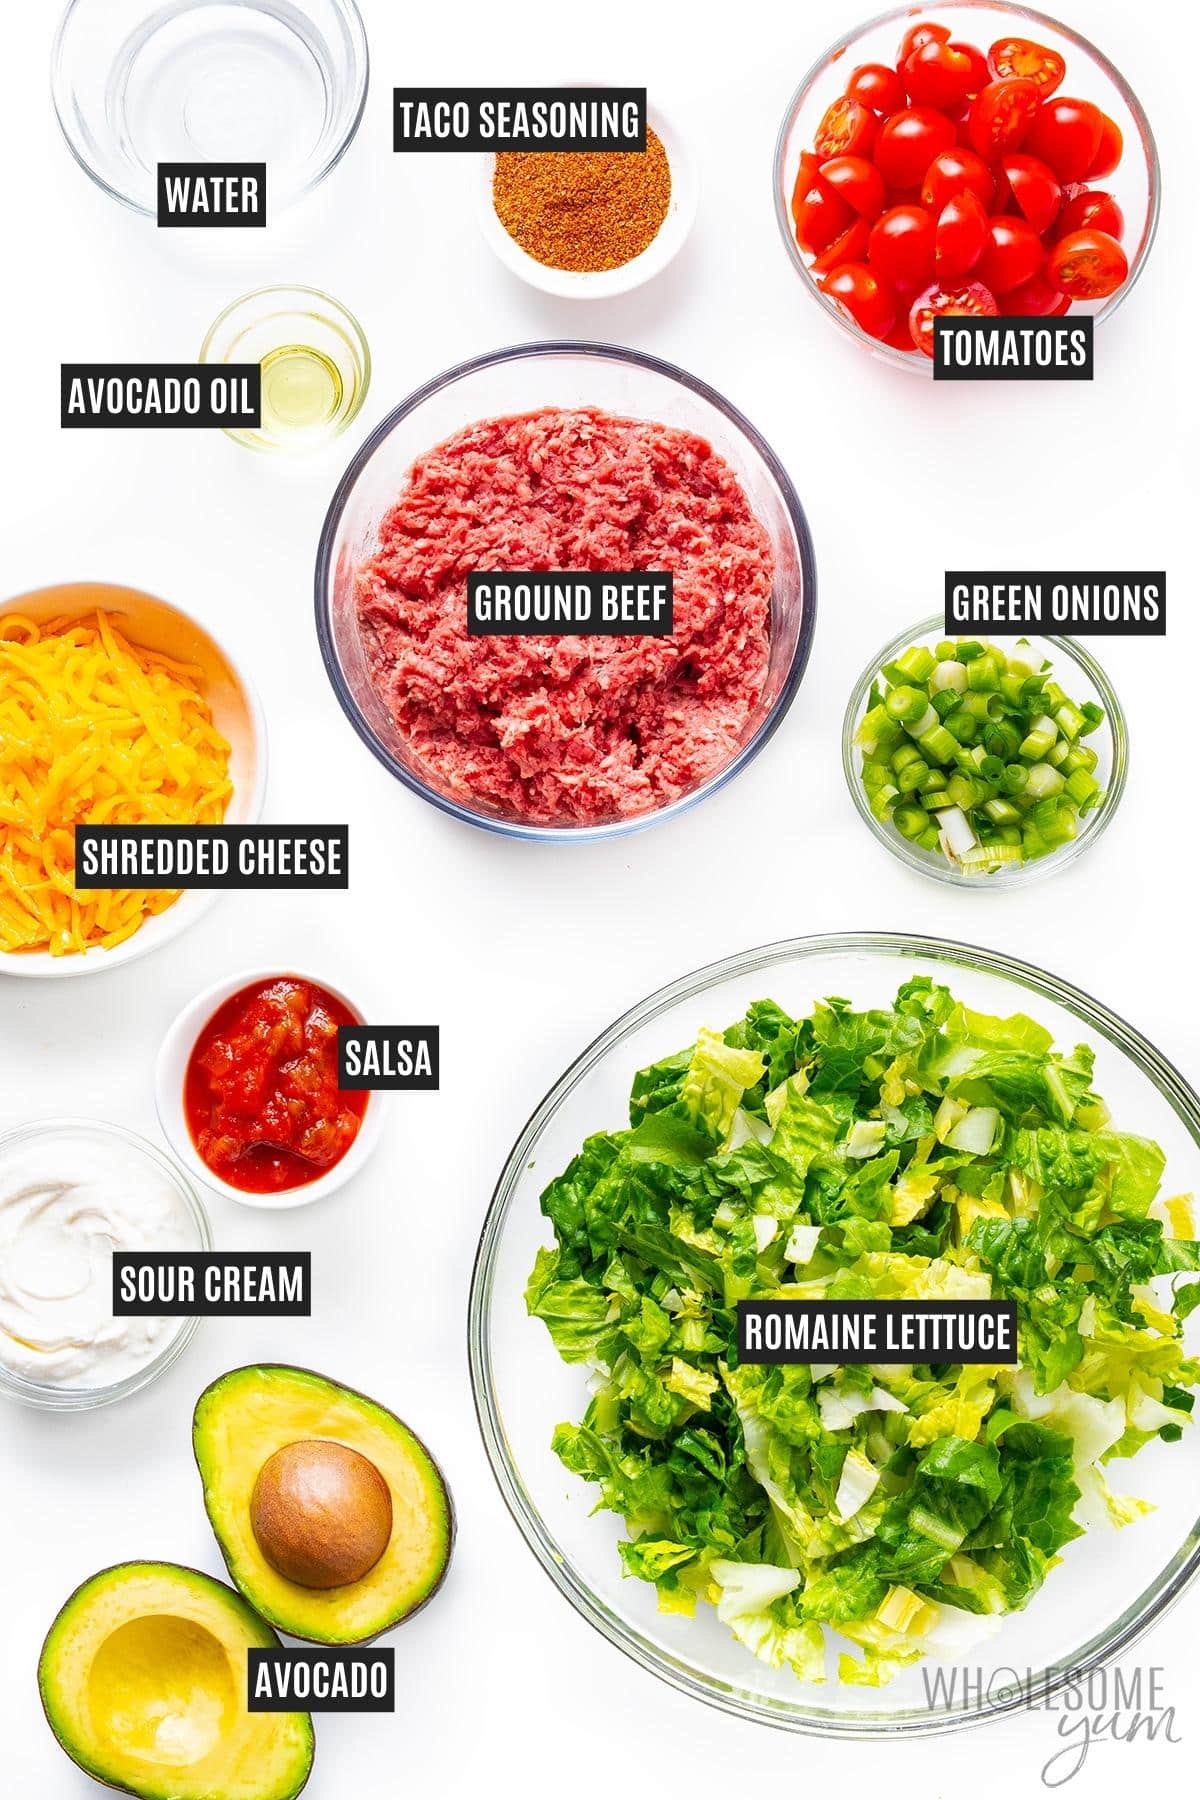 Taco salad ingredients in bowls.